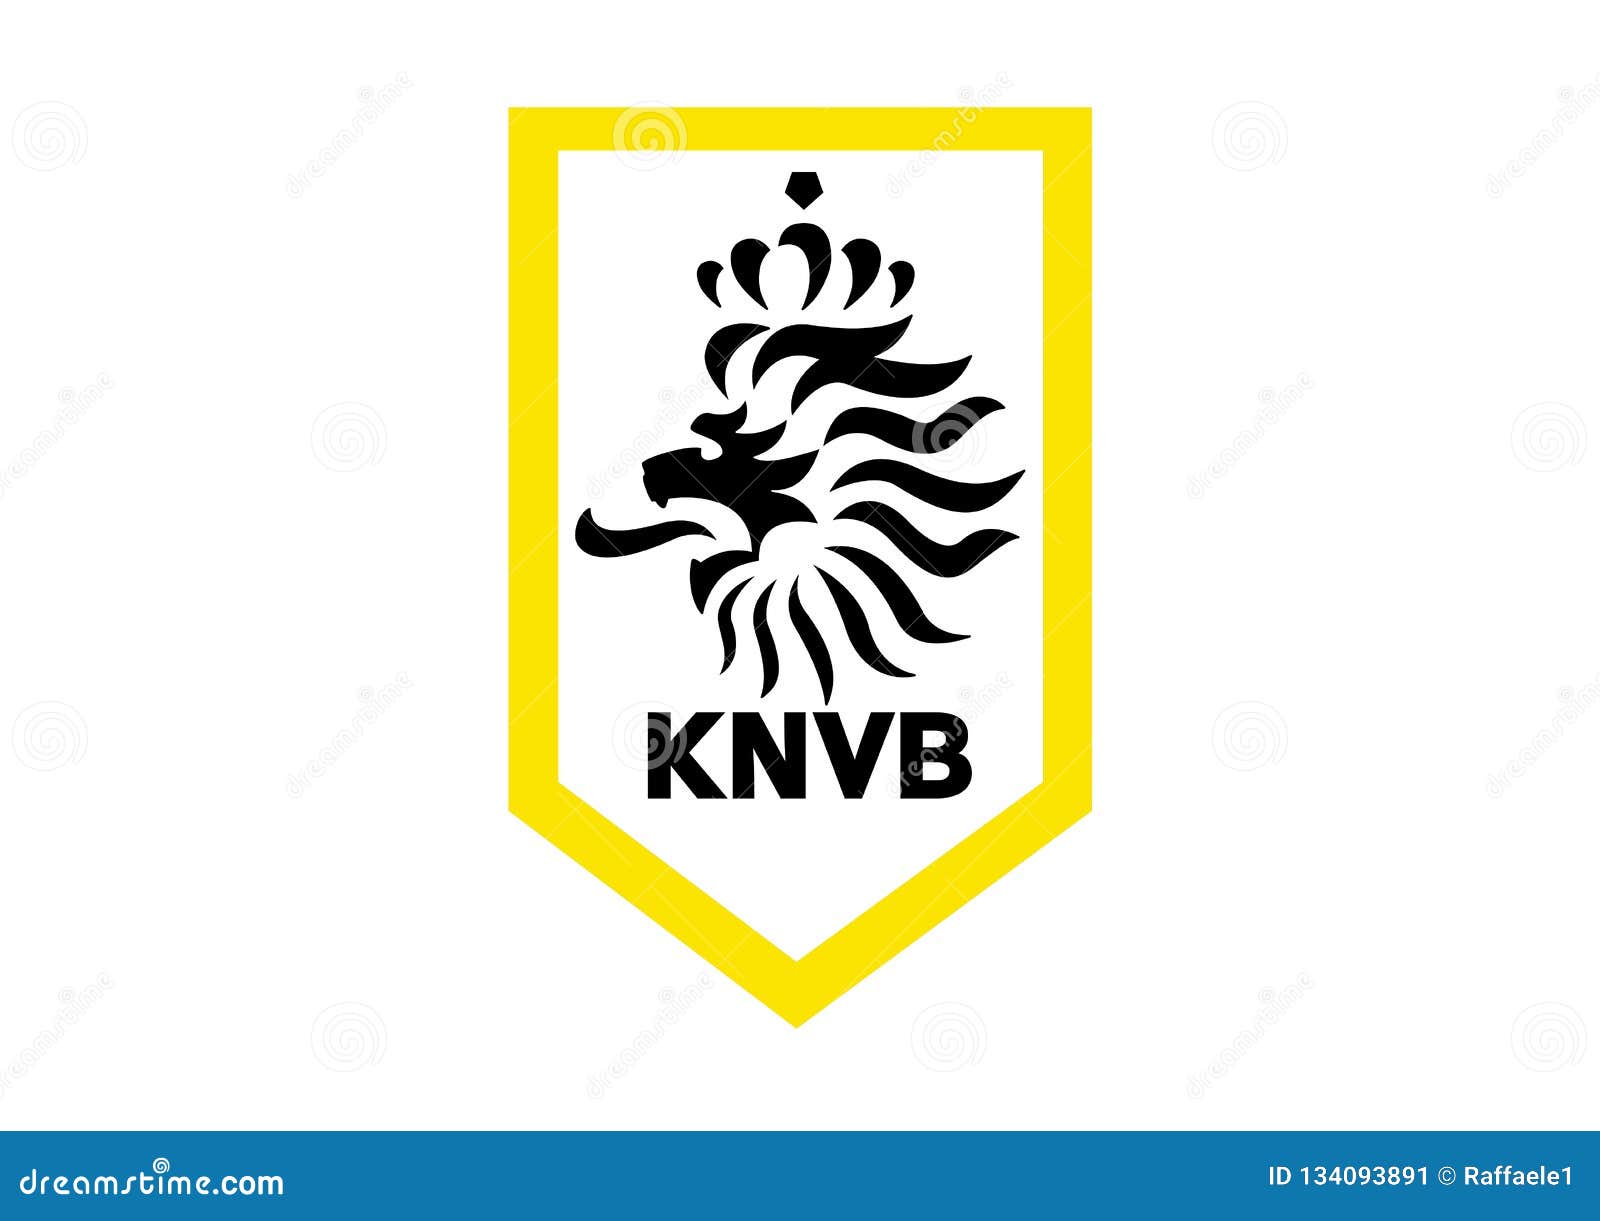 Team Logos, KNVB logo transparent background PNG clipart